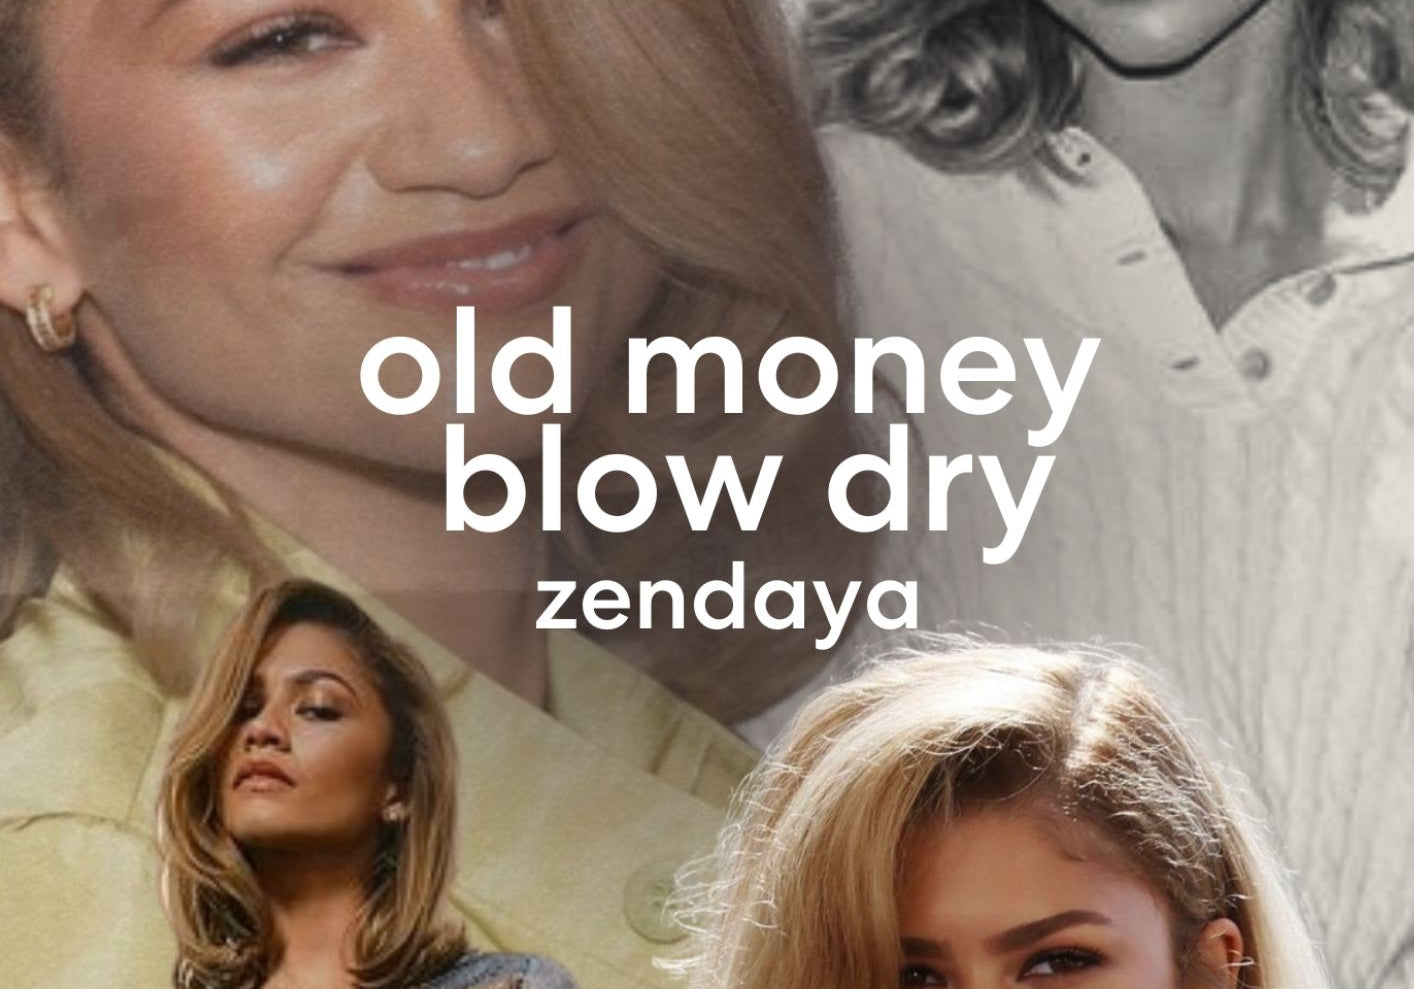 Zendaya’s Old Money blowdry is everything